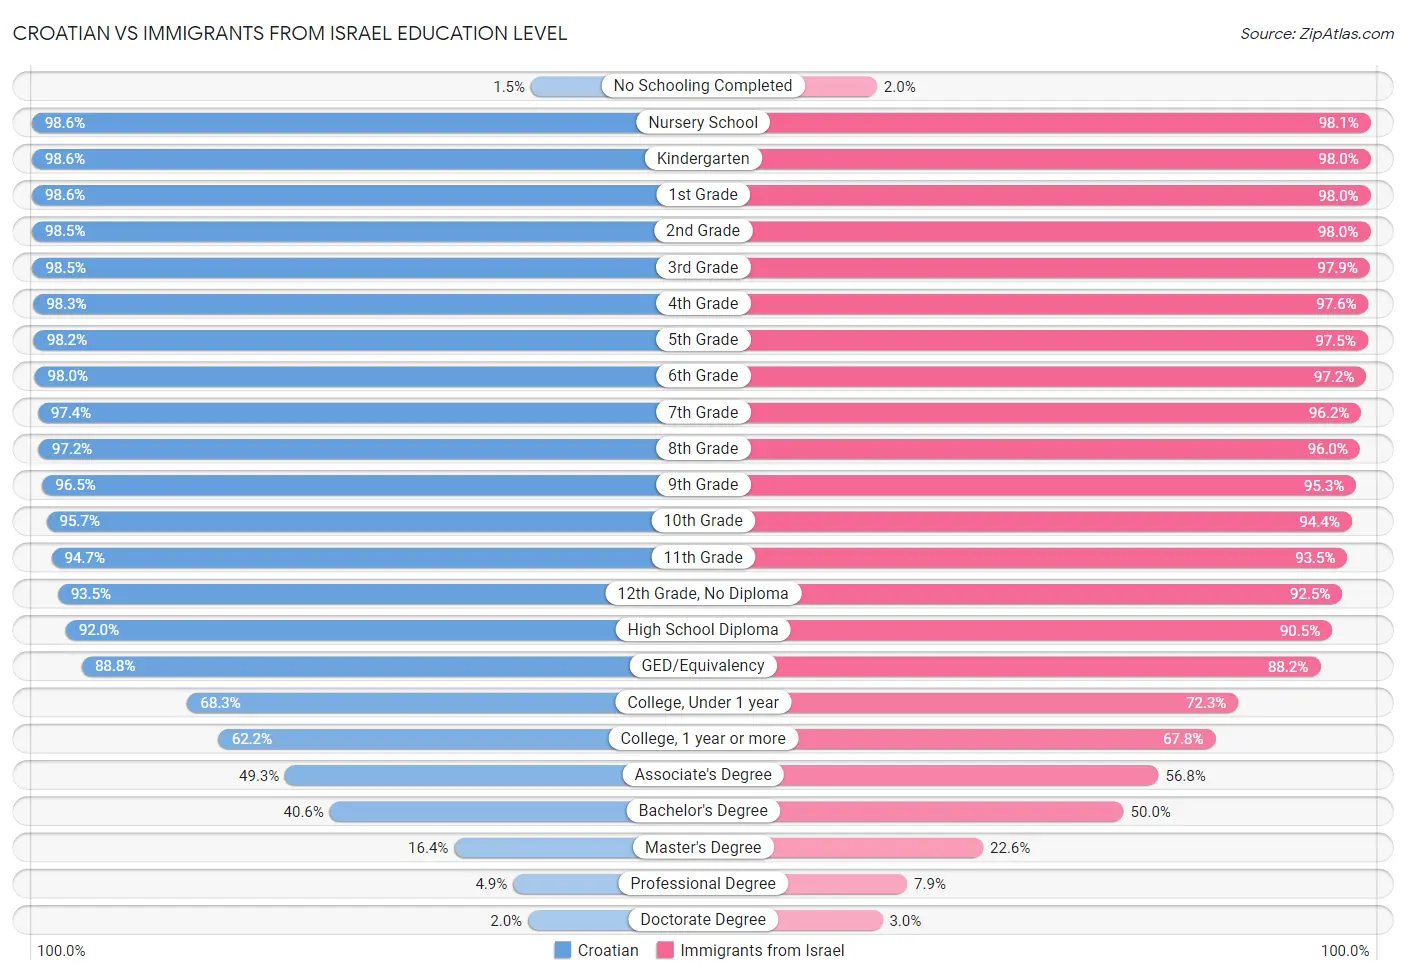 Croatian vs Immigrants from Israel Education Level